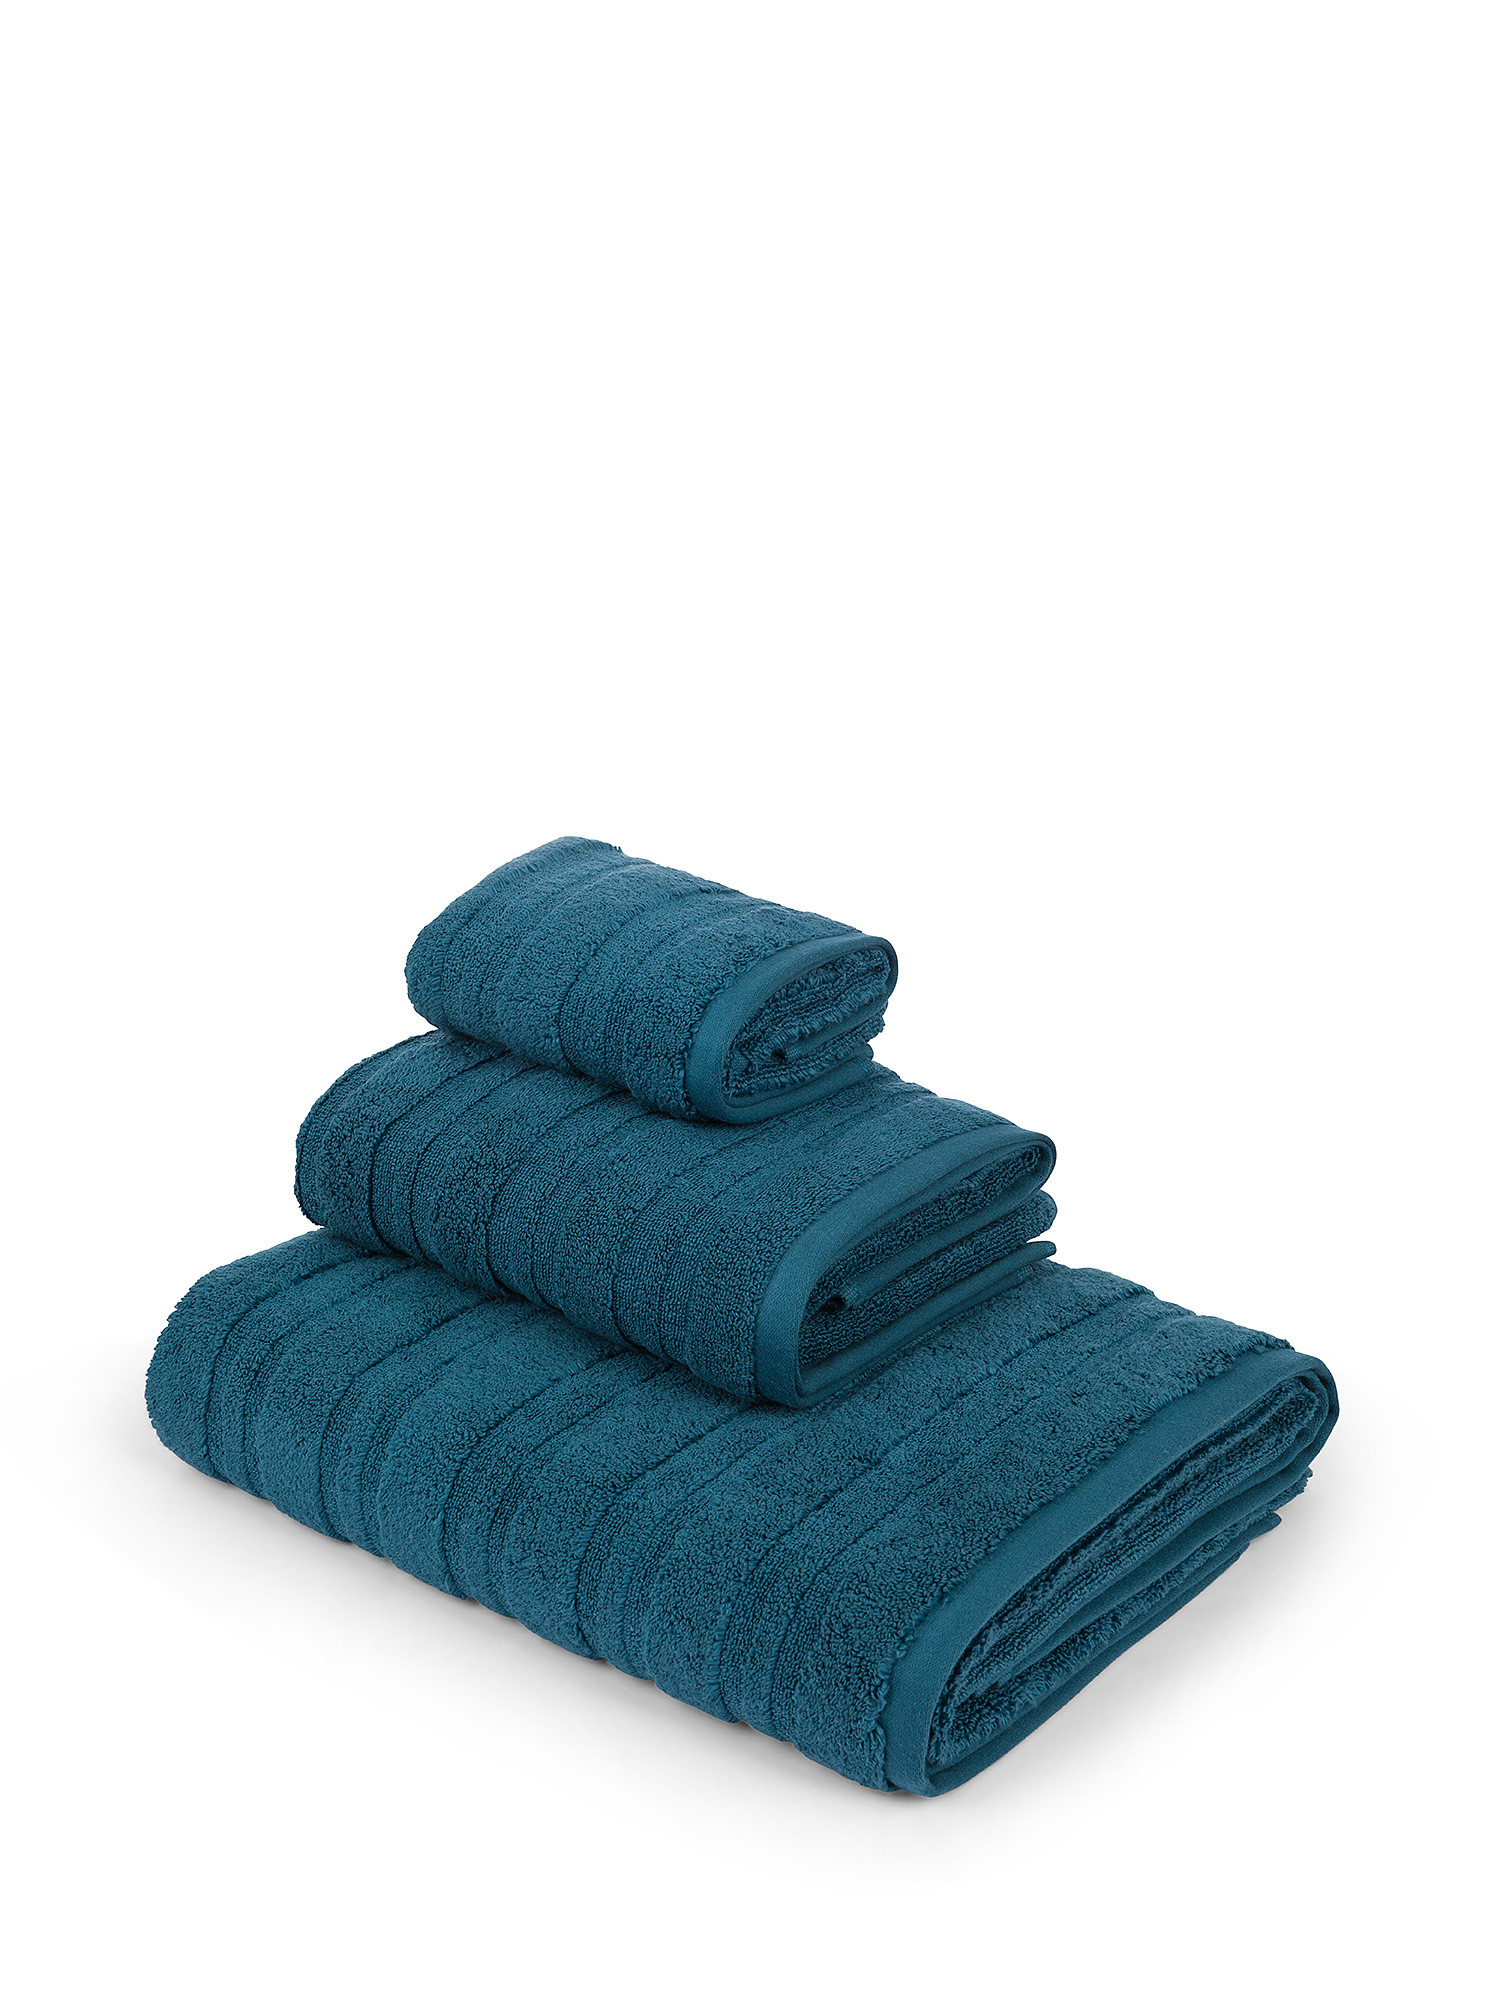 Zefiro Gold solid color 100% cotton towel, Blue, large image number 0